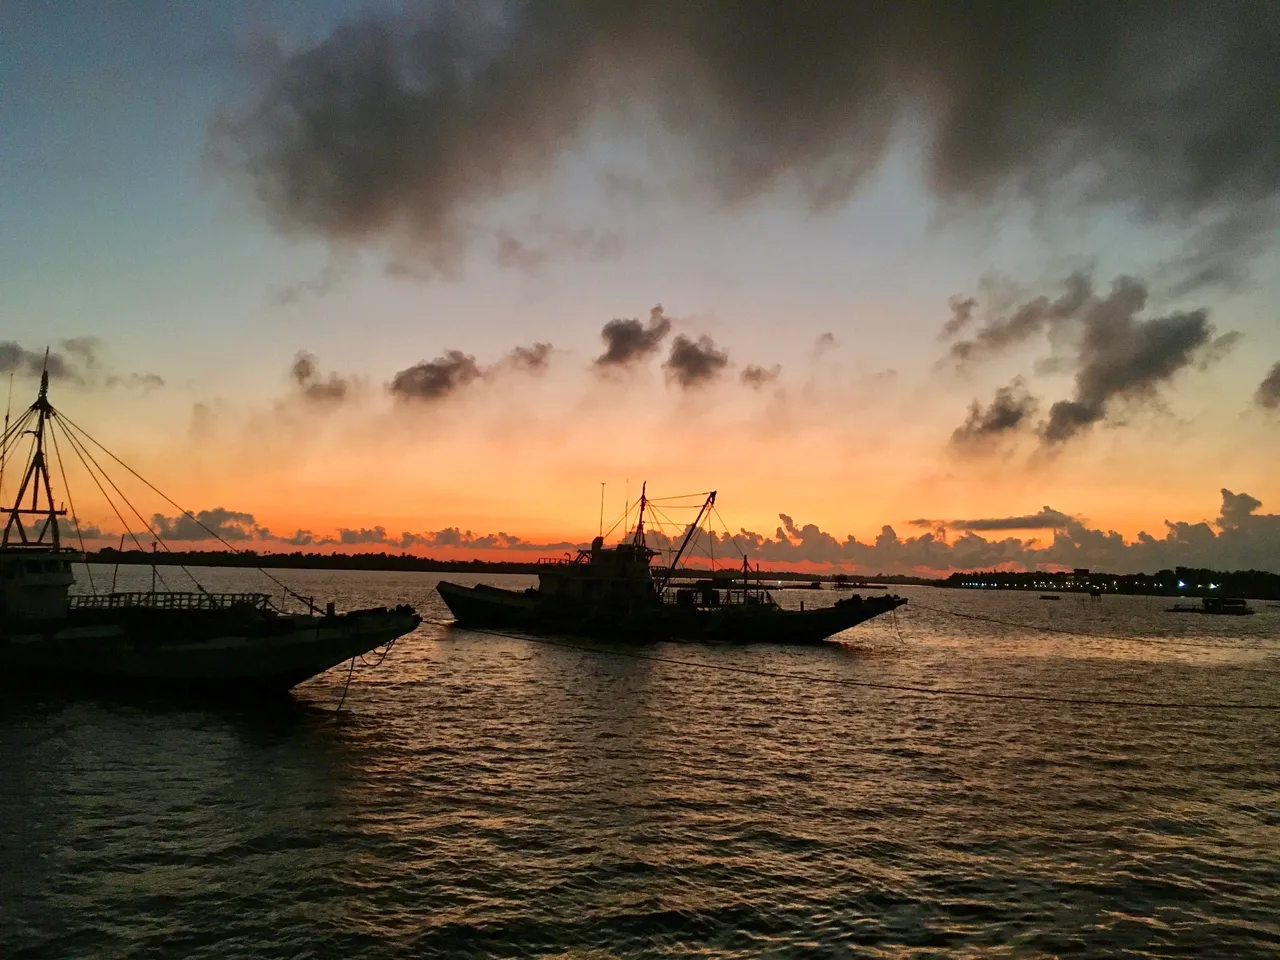 The majestic sunrise at Hagnaya Port. It spews vibrant yellow-orange sunlight